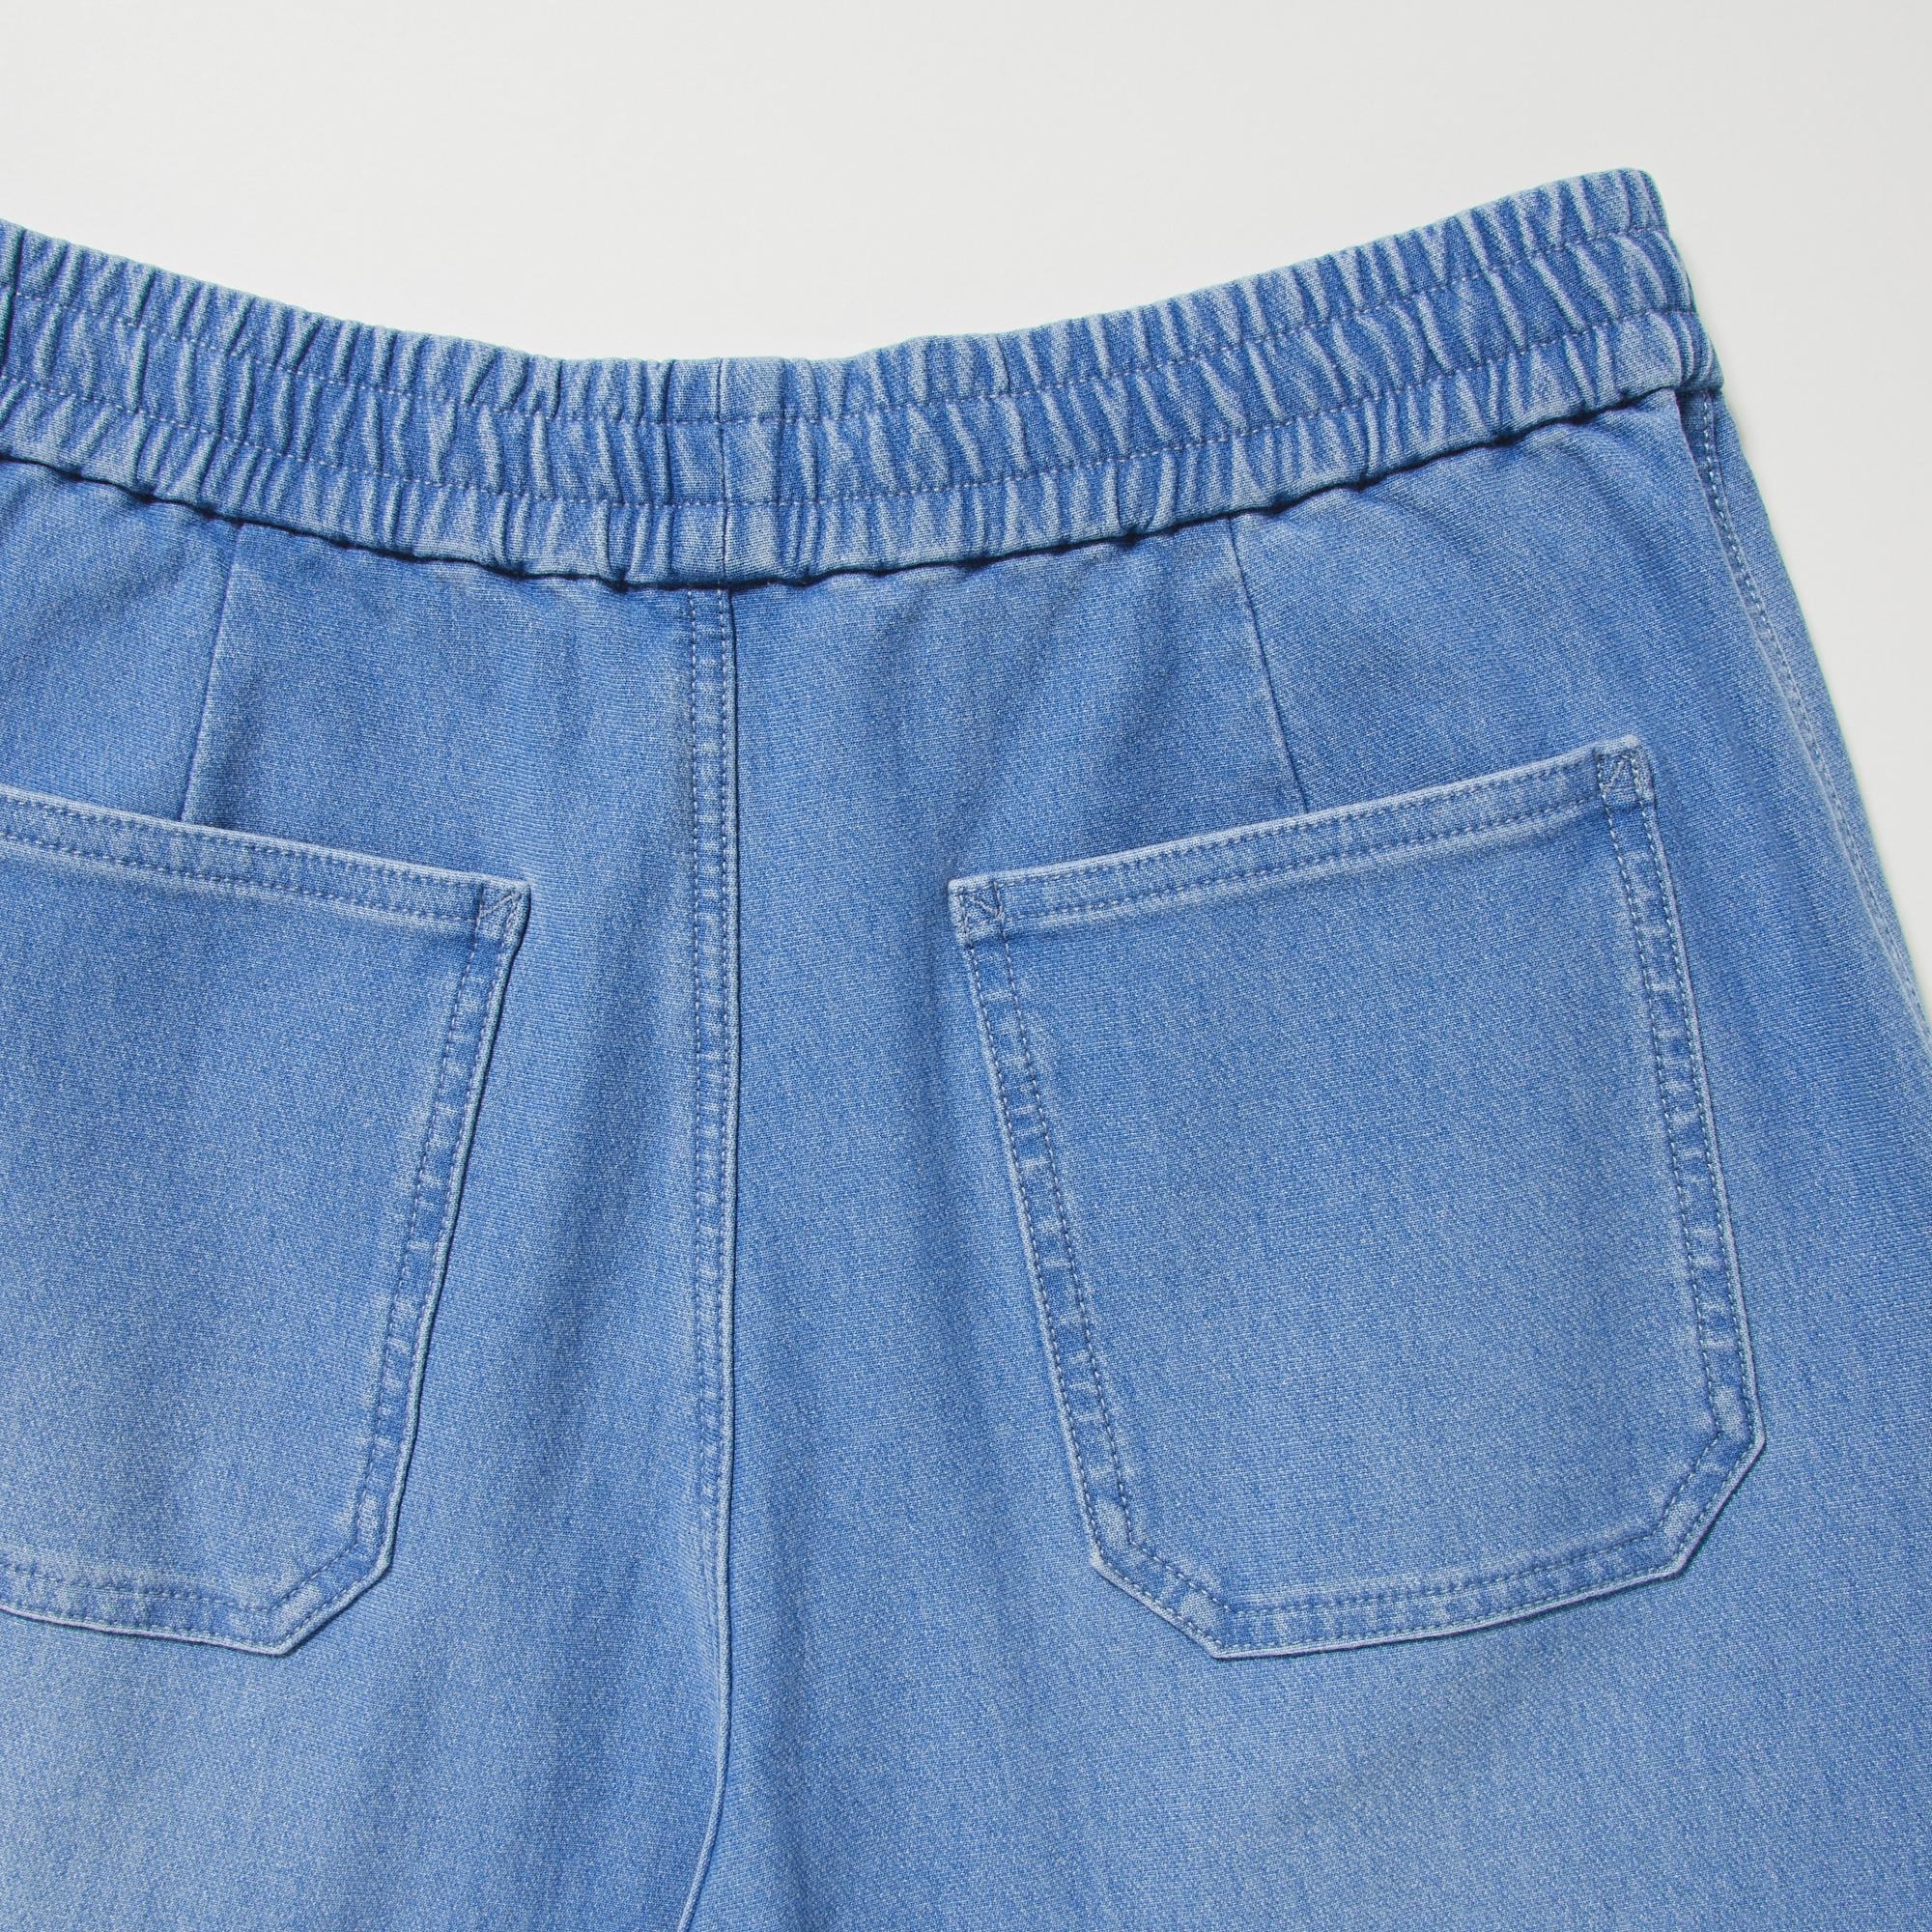 Buy Boys Slim Fit Cotton Jeans , Light Blue Pants Online at 63% OFF | Cub  McPaws